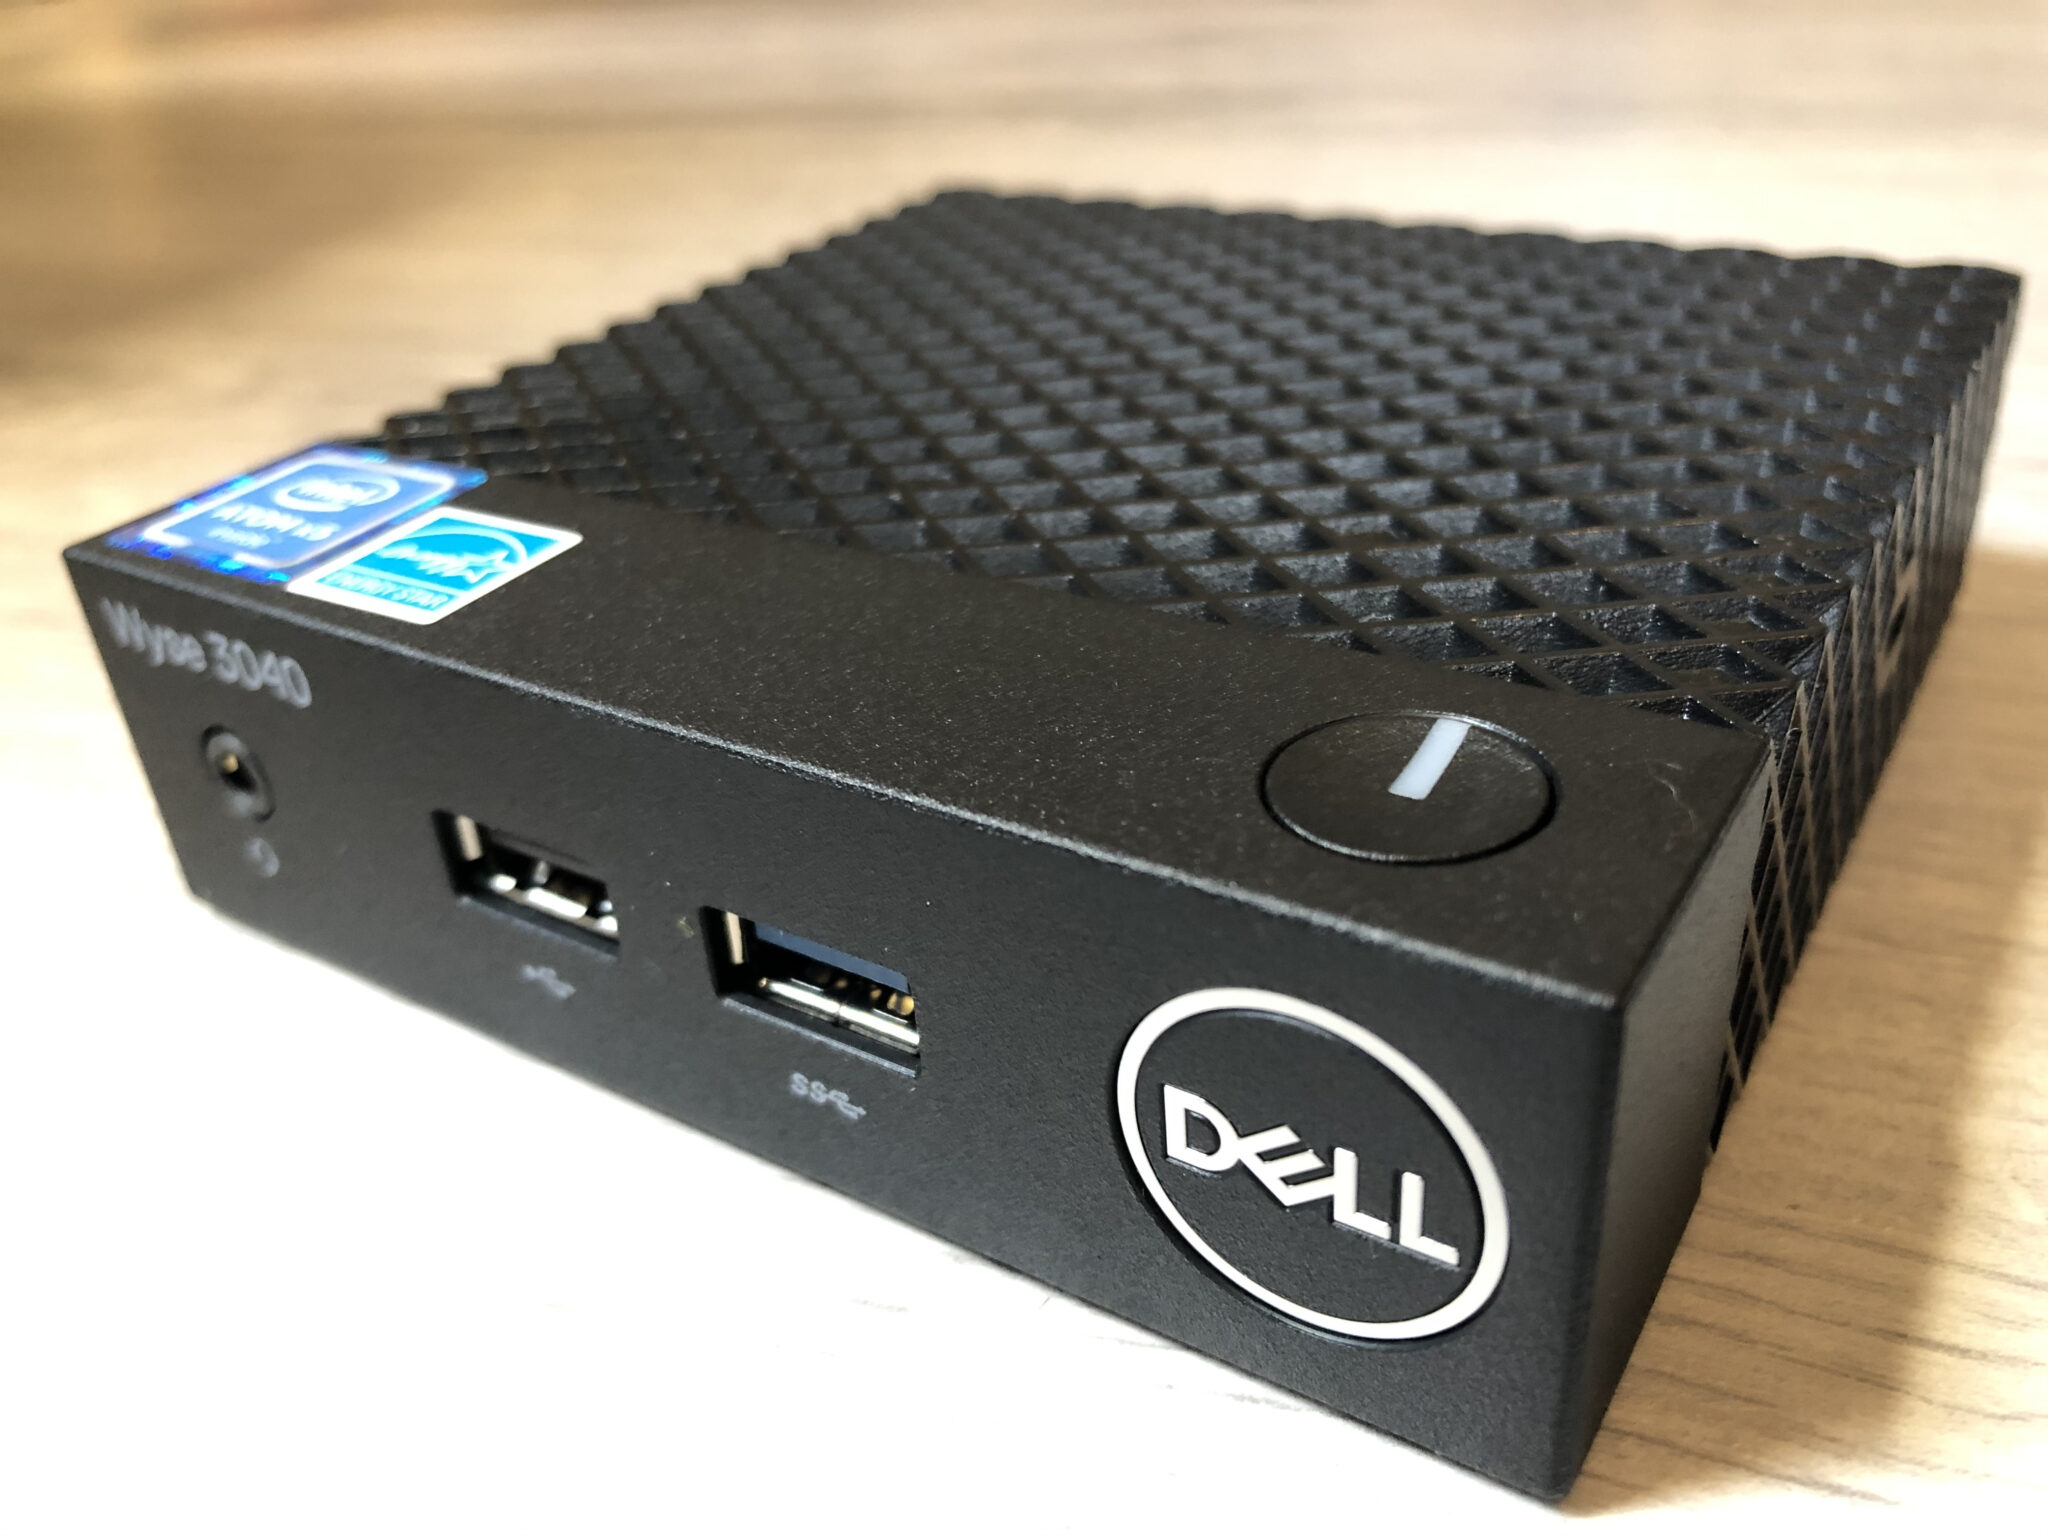 Dell 3130цн Firmware